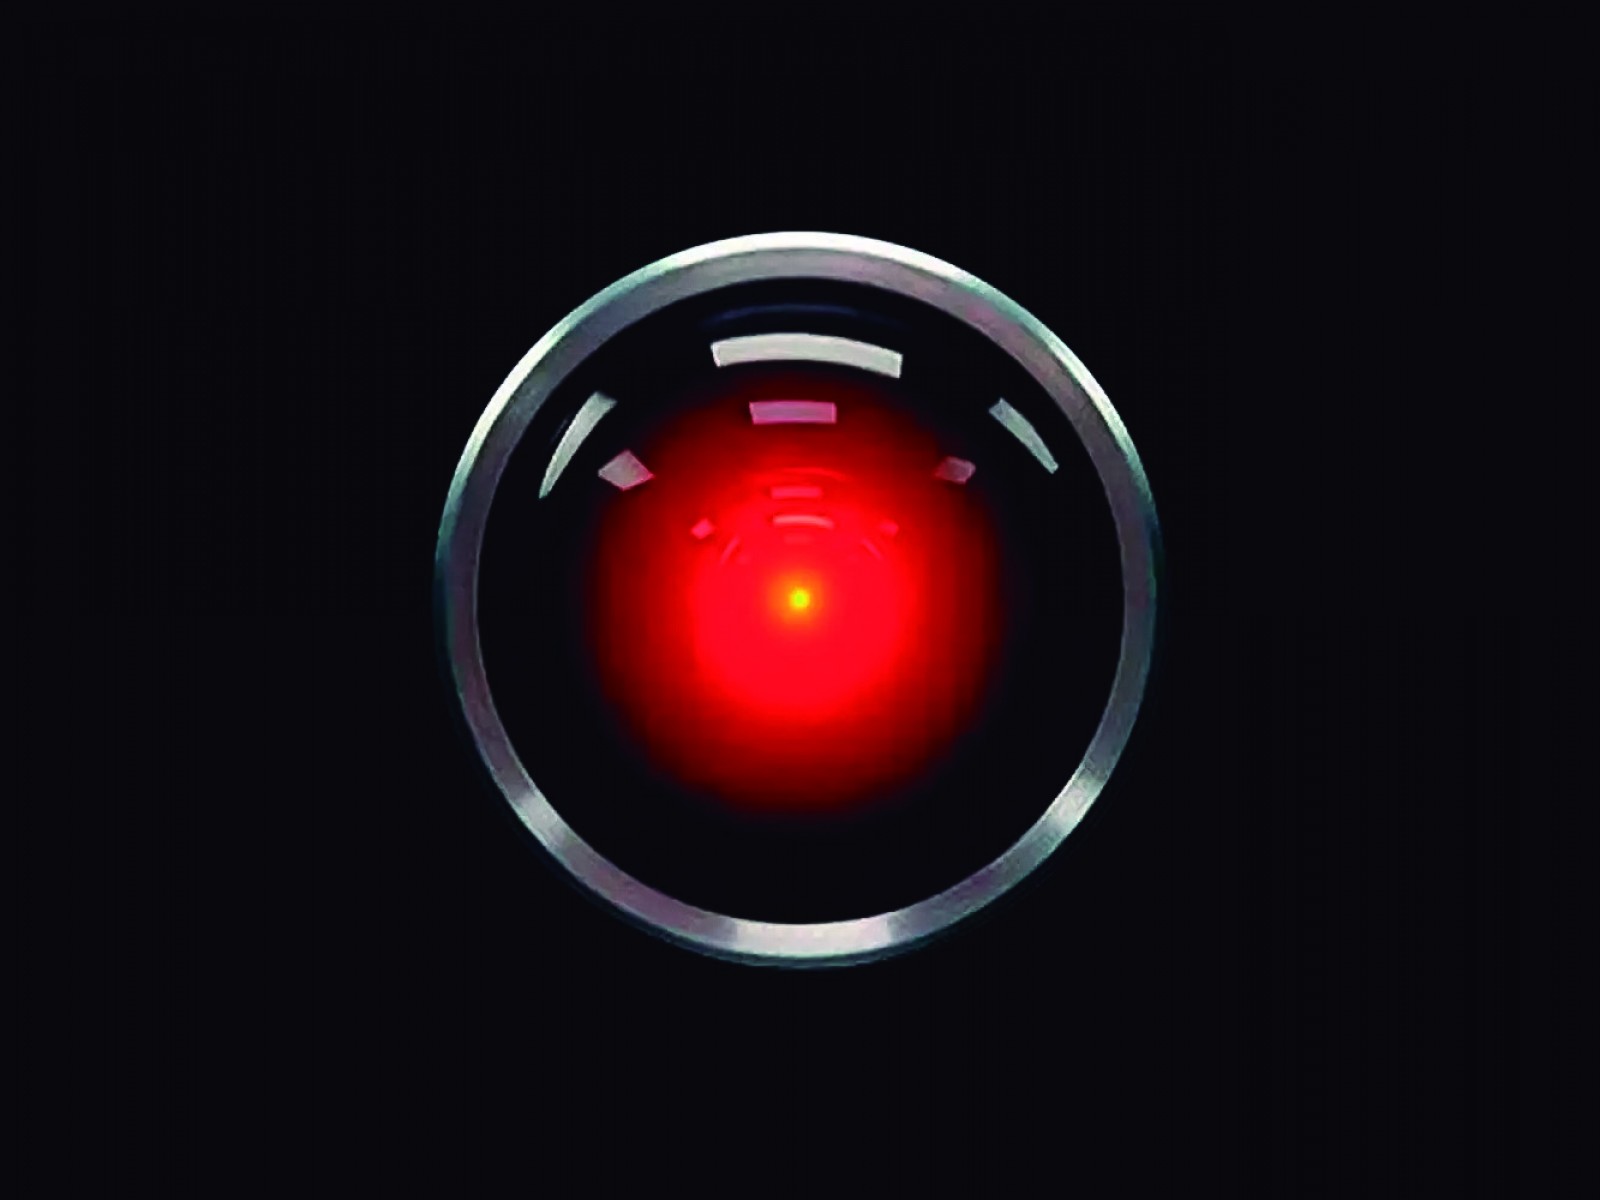 Imatge de HAL 9000, el superordinador de la pel·lícula '2001. A Space Odyssey' d'Stanley Kubrick